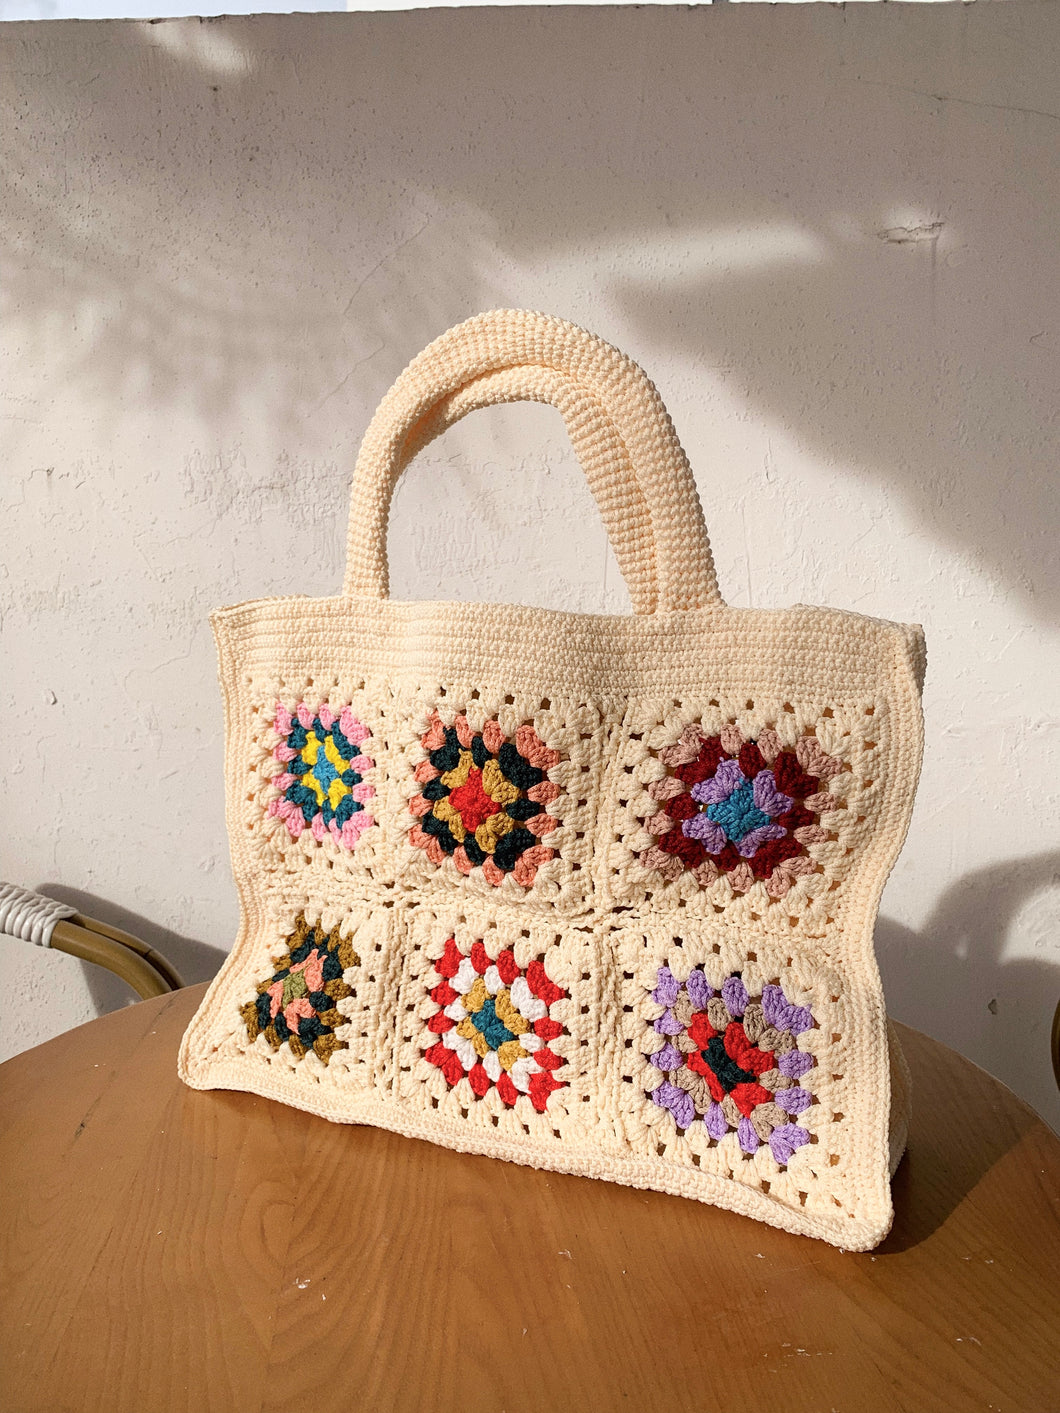 Churi Granny Square Crochet Bag